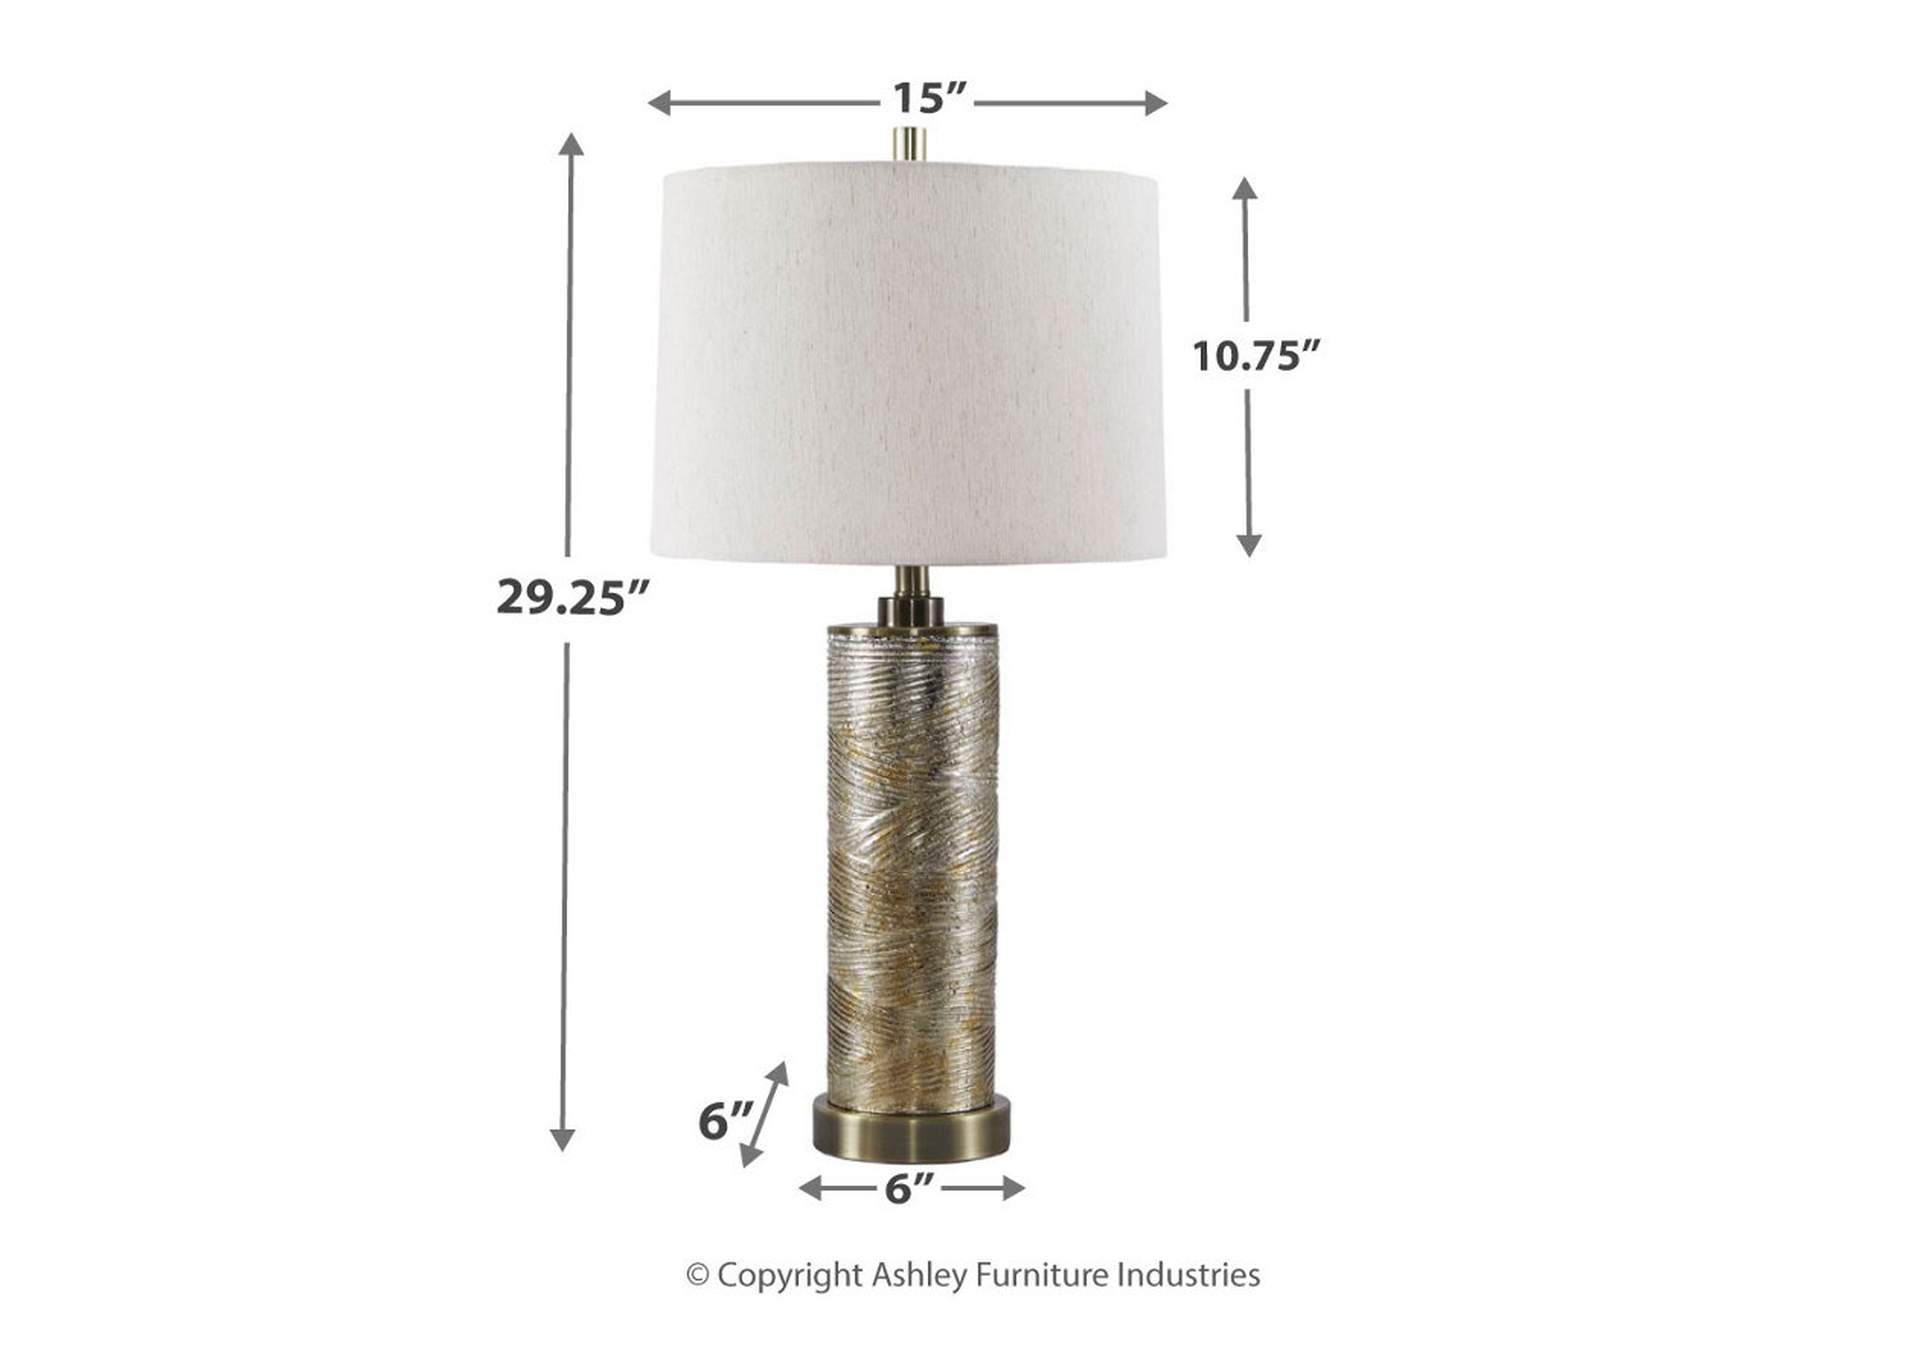 Farrar Table Lamp,Direct To Consumer Express